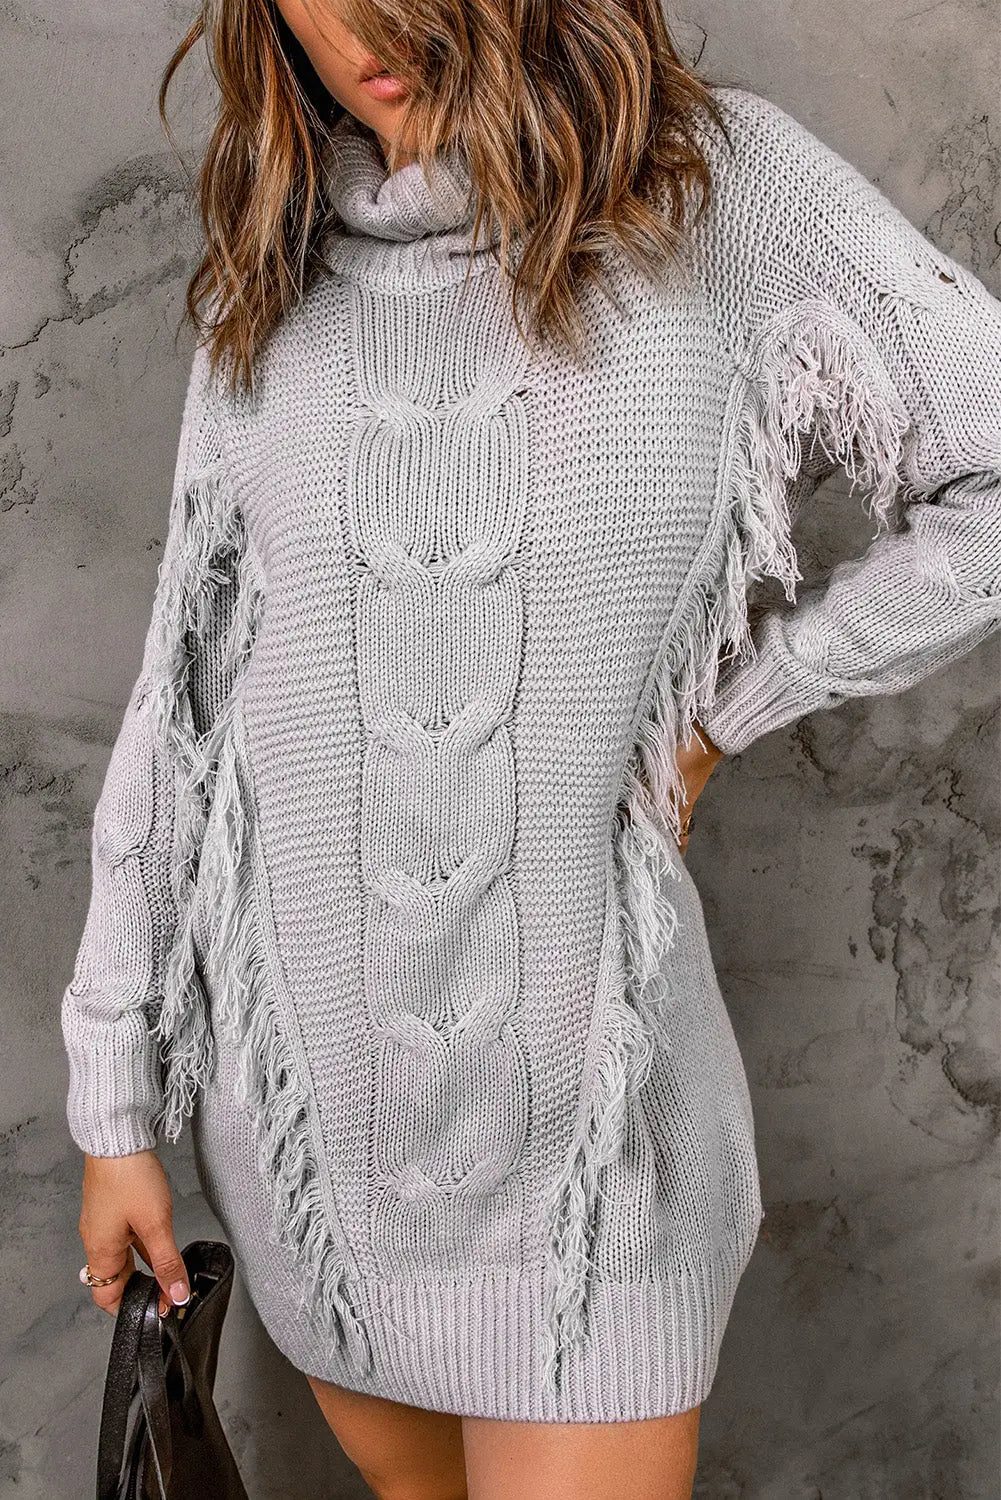 Gray twist fringe casual high neck sweater dress - dresses